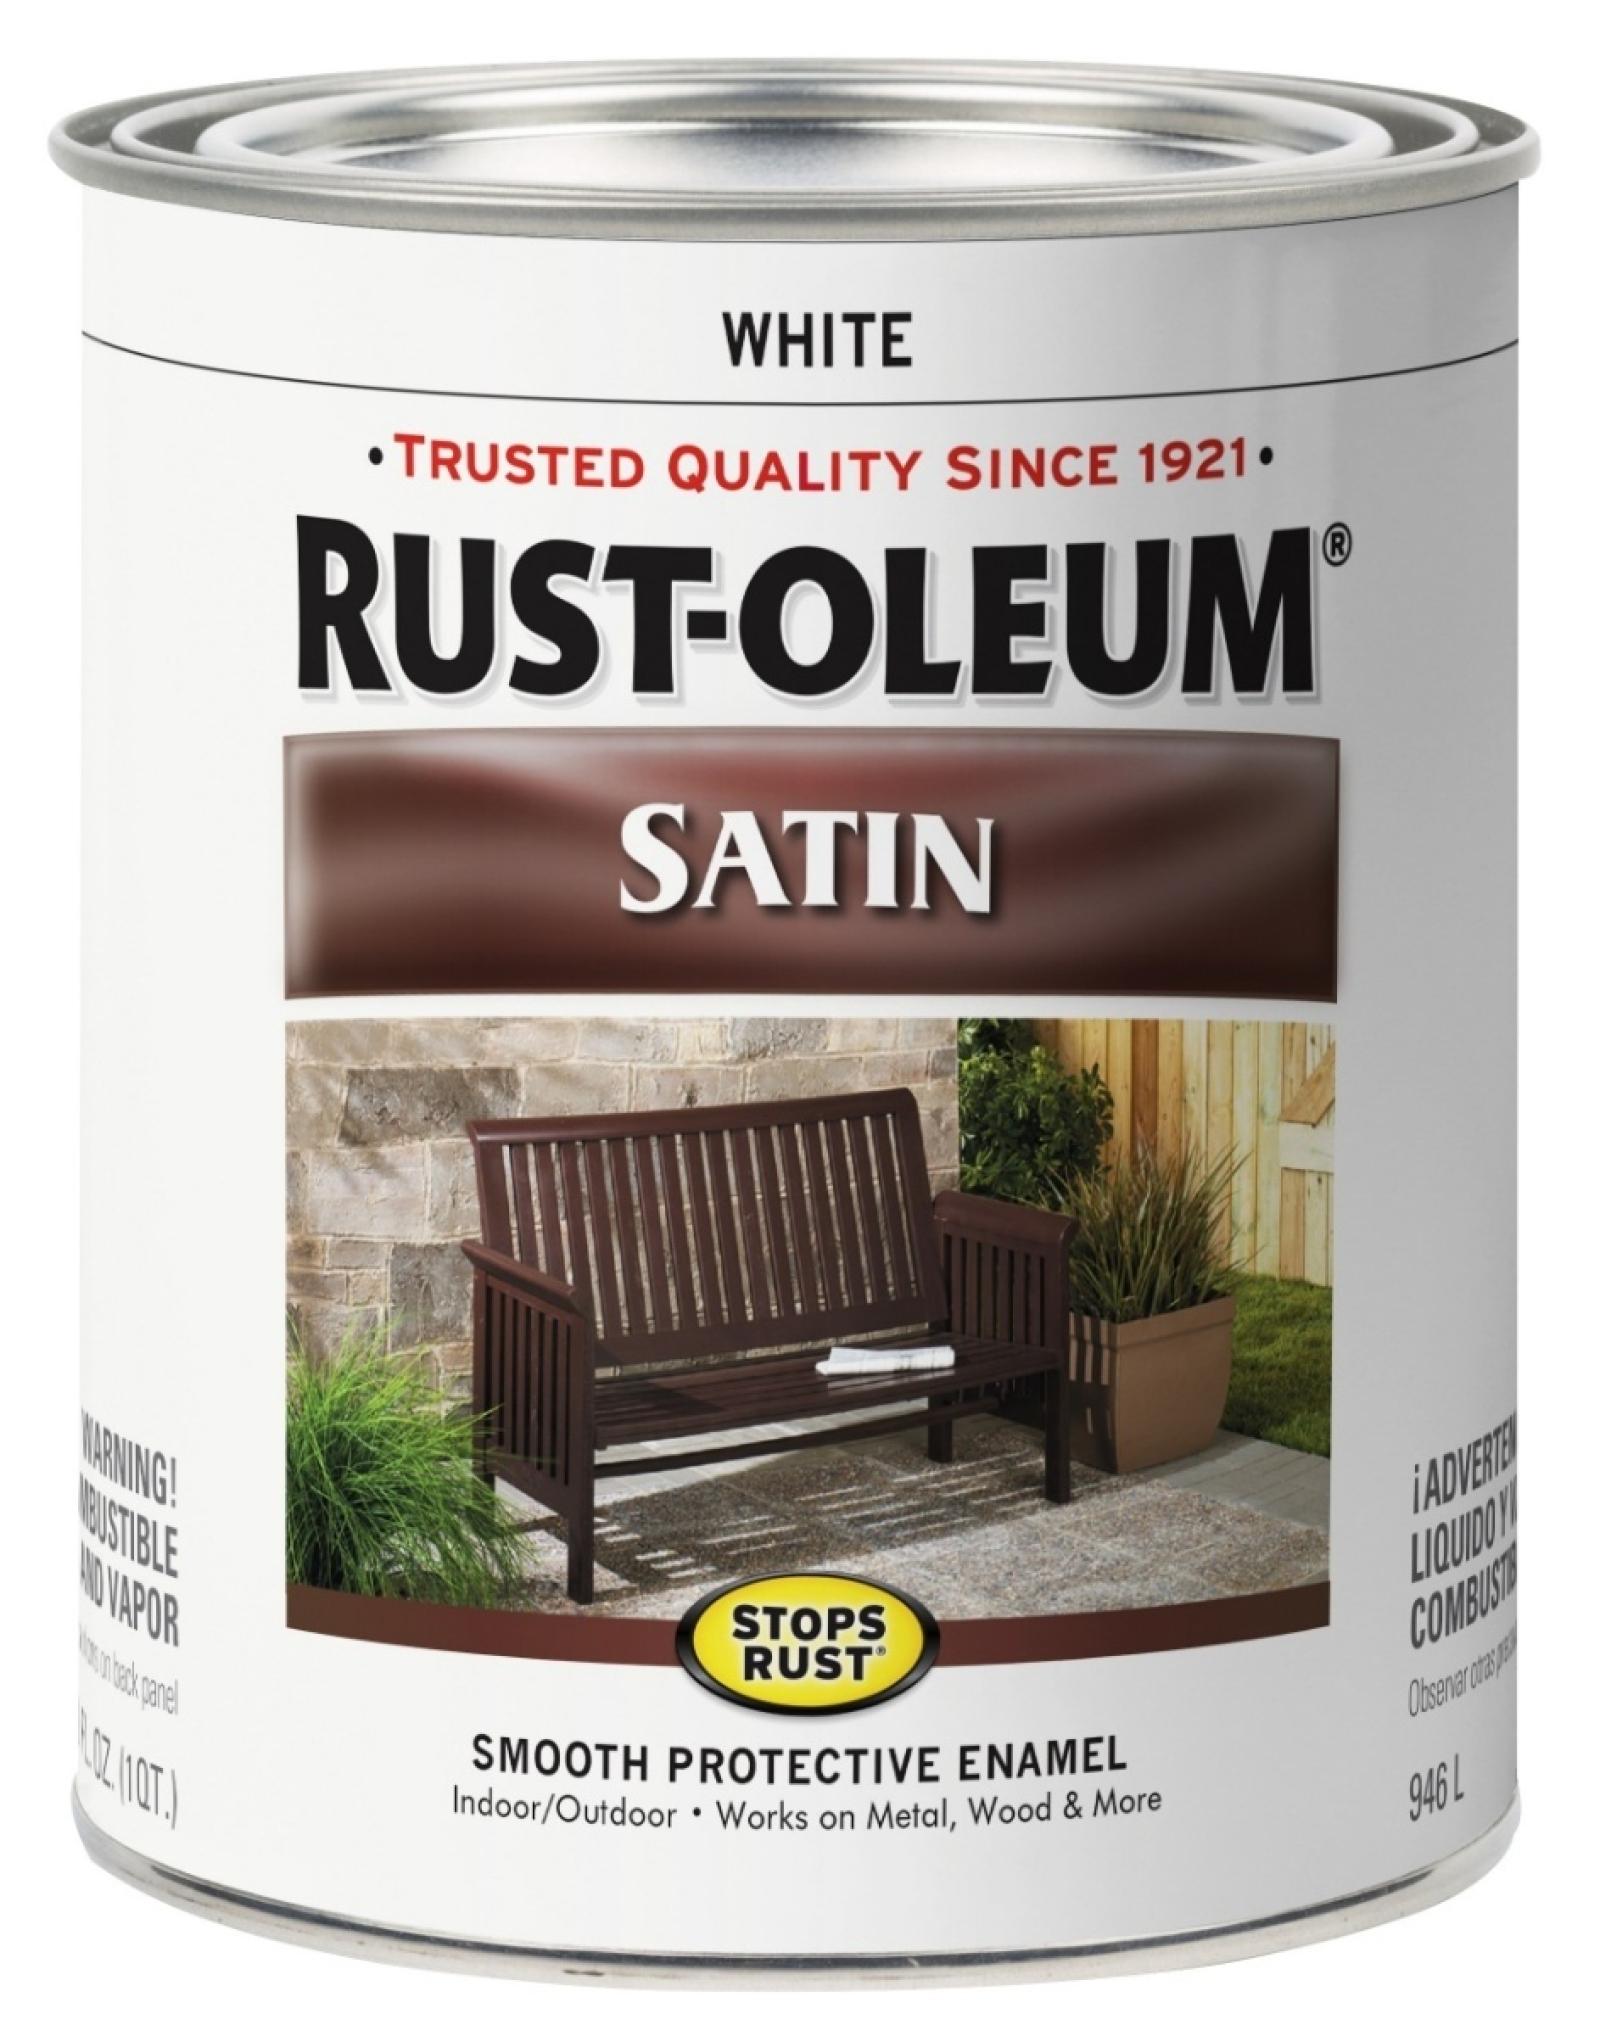 Rust-Oleum Protective Enamel Brush-On Paint